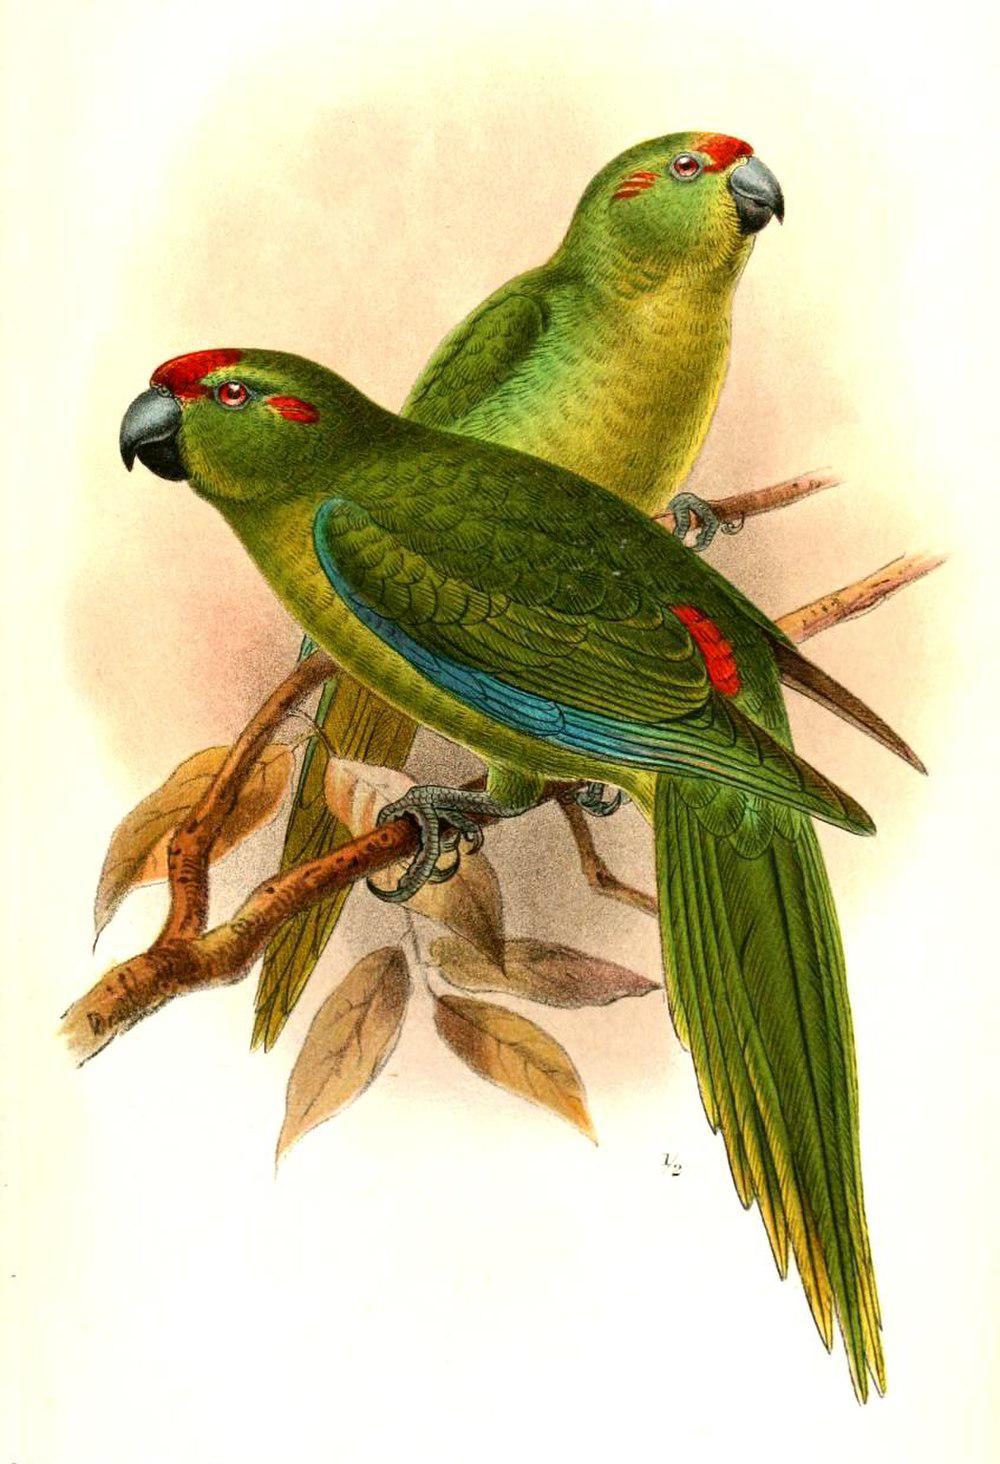 豪勋爵岛鹦鹉 / Lord Howe Parakeet / Cyanoramphus subflavescens